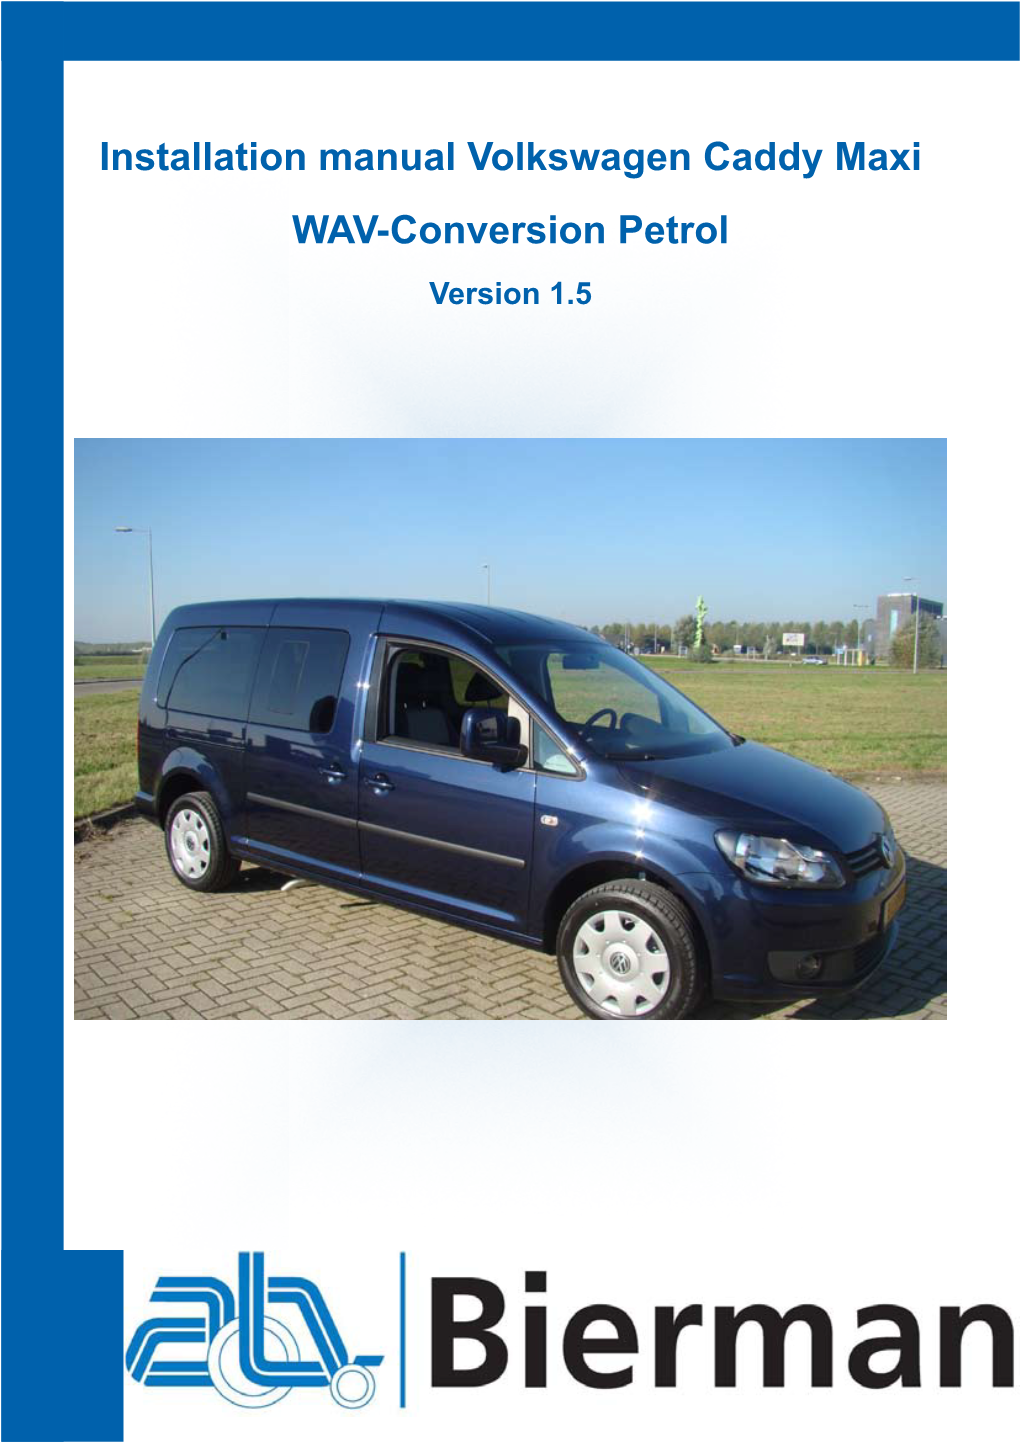 Installation Manual Volkswagen Caddy Maxi WAV-Conversion Petrol